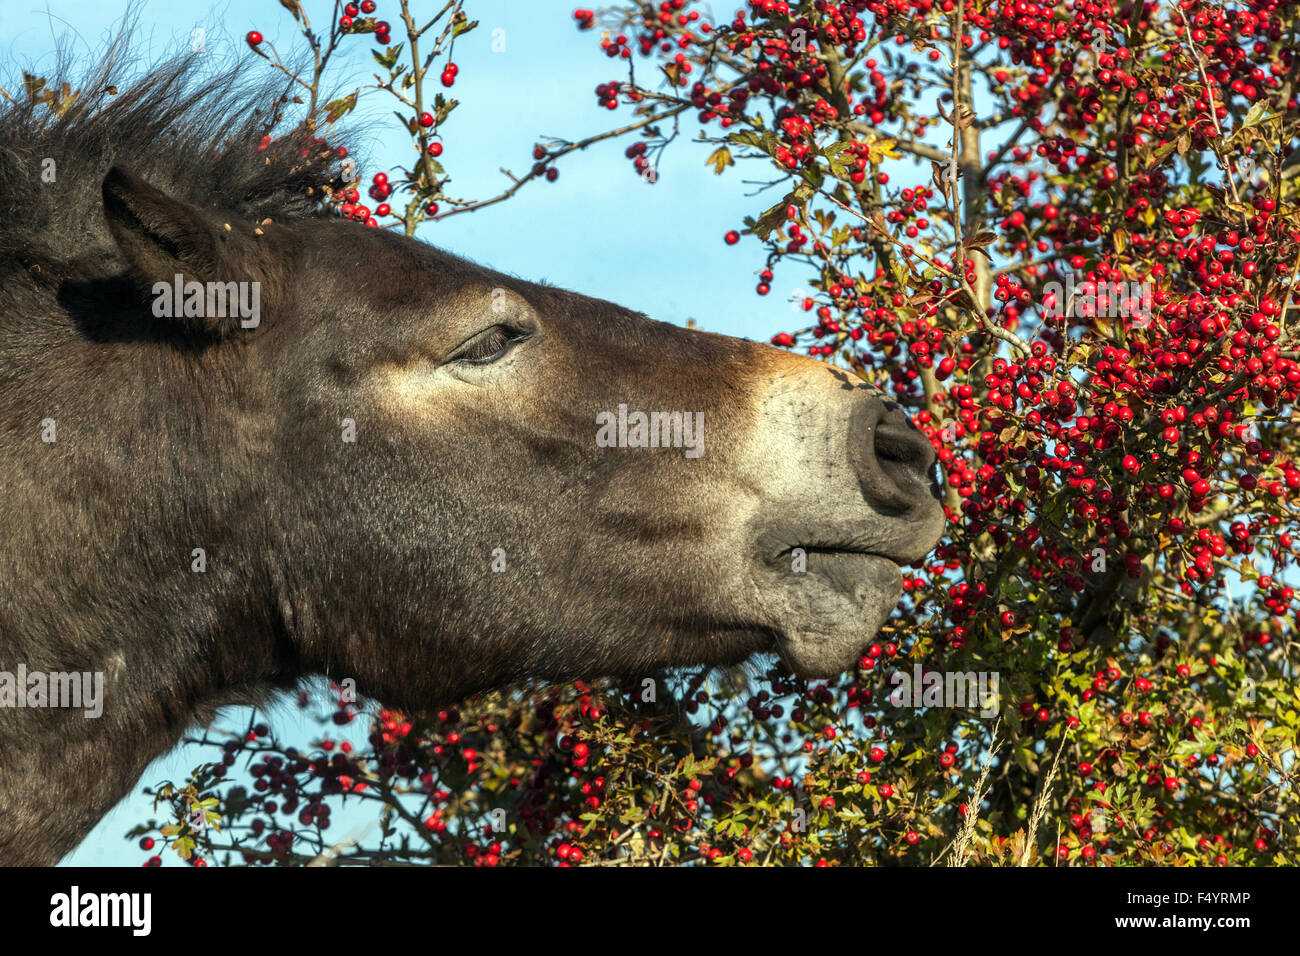 Wild horse eating autumn red berries, Czech Republic Stock Photo